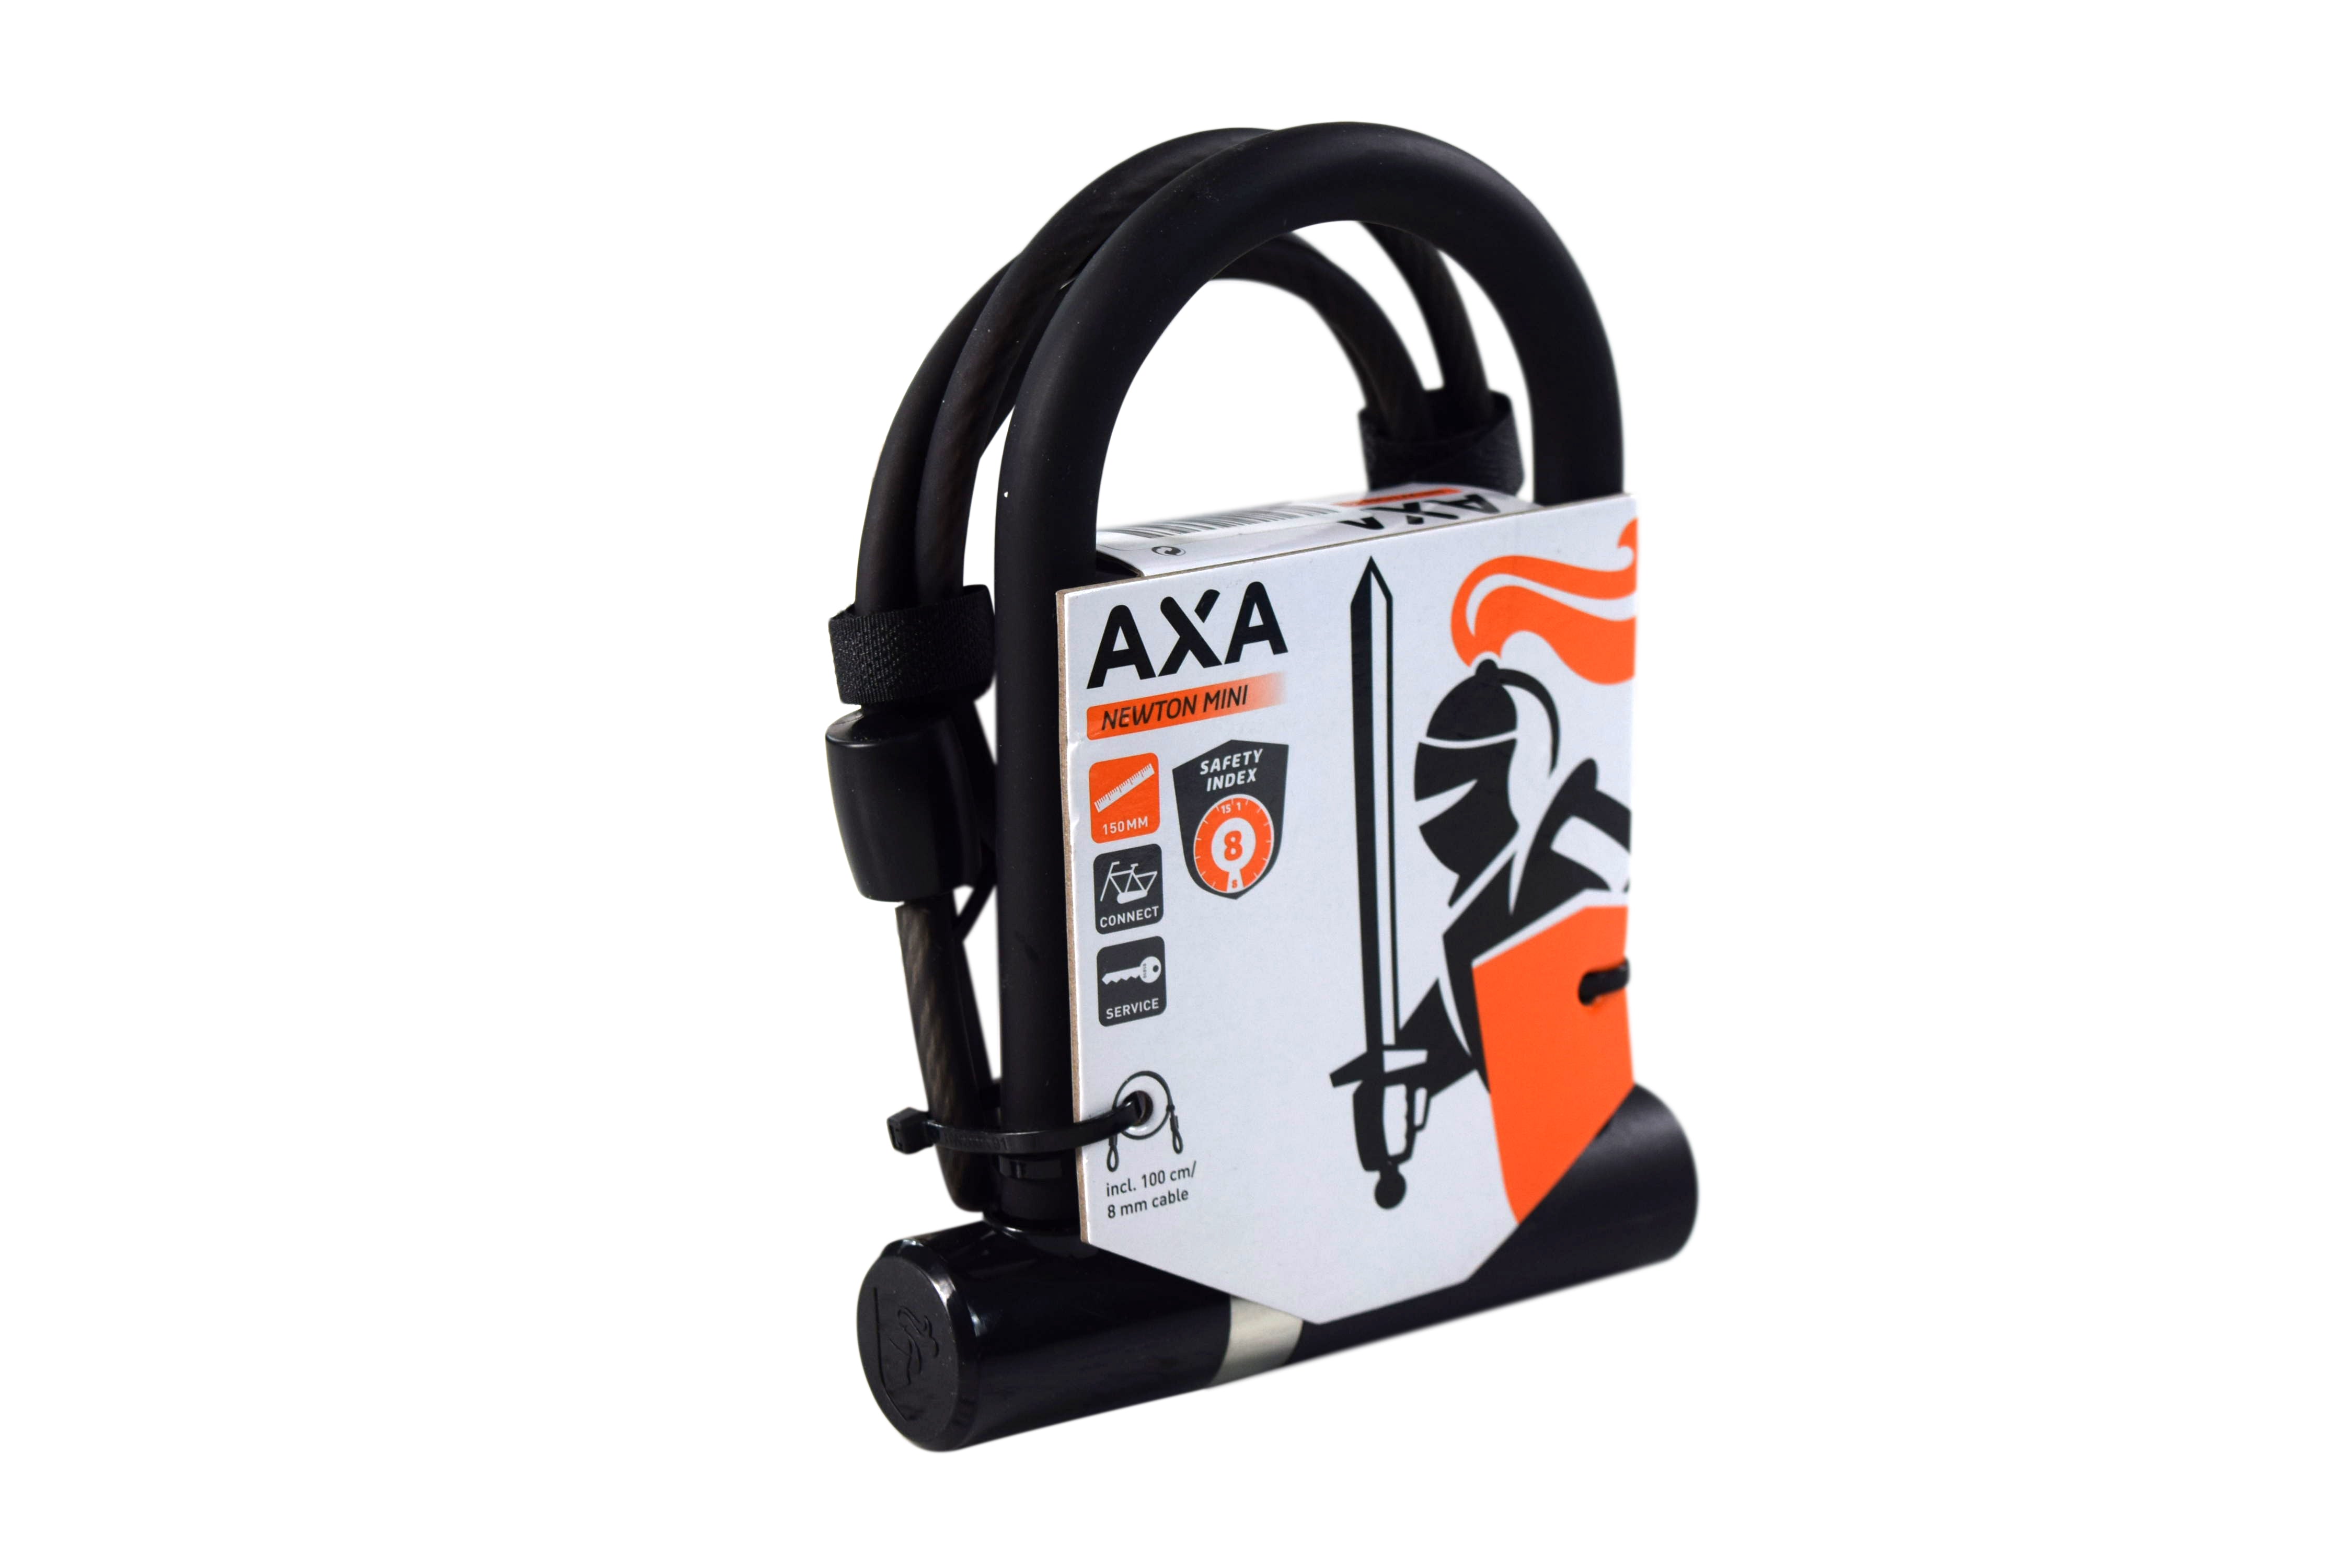 AXA-005155-Newton-Mini-Cable-100-8-w-Mounting-Bracket-U-Lock-image-3